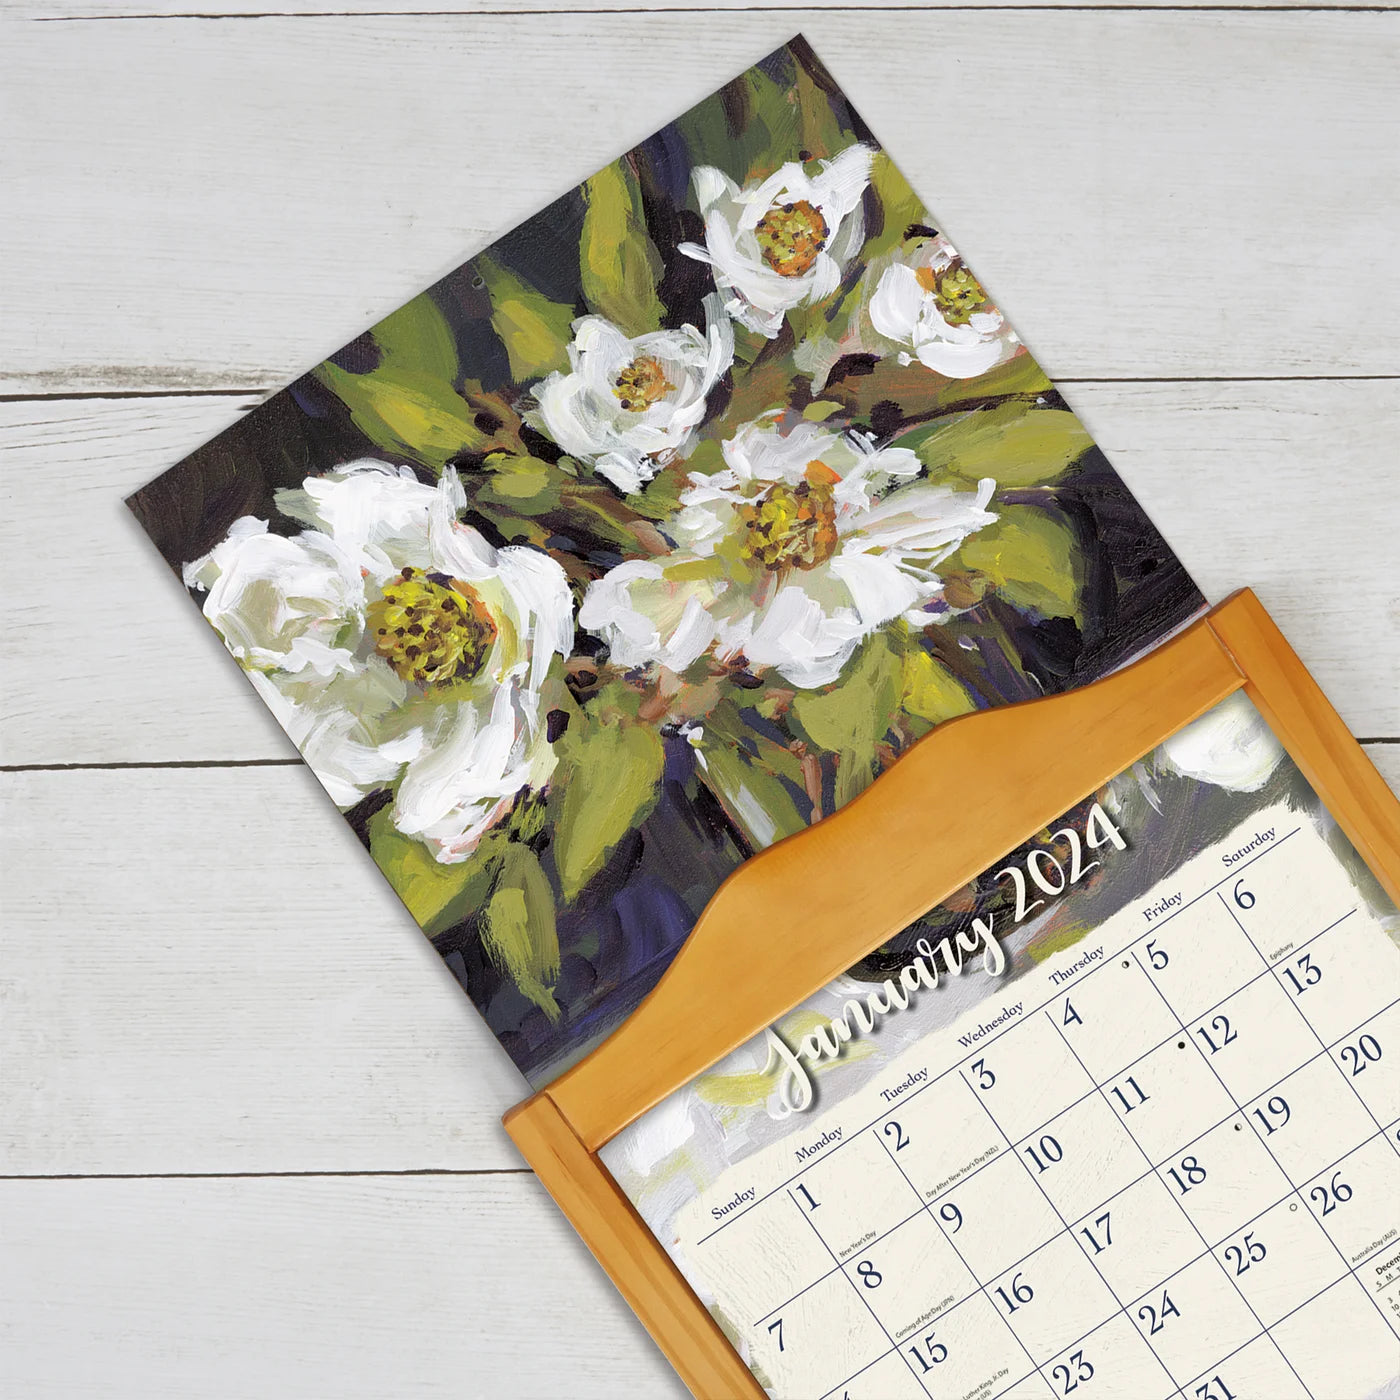 2024 LANG Gallery Florals By Susan Winget - Deluxe Wall Calendar